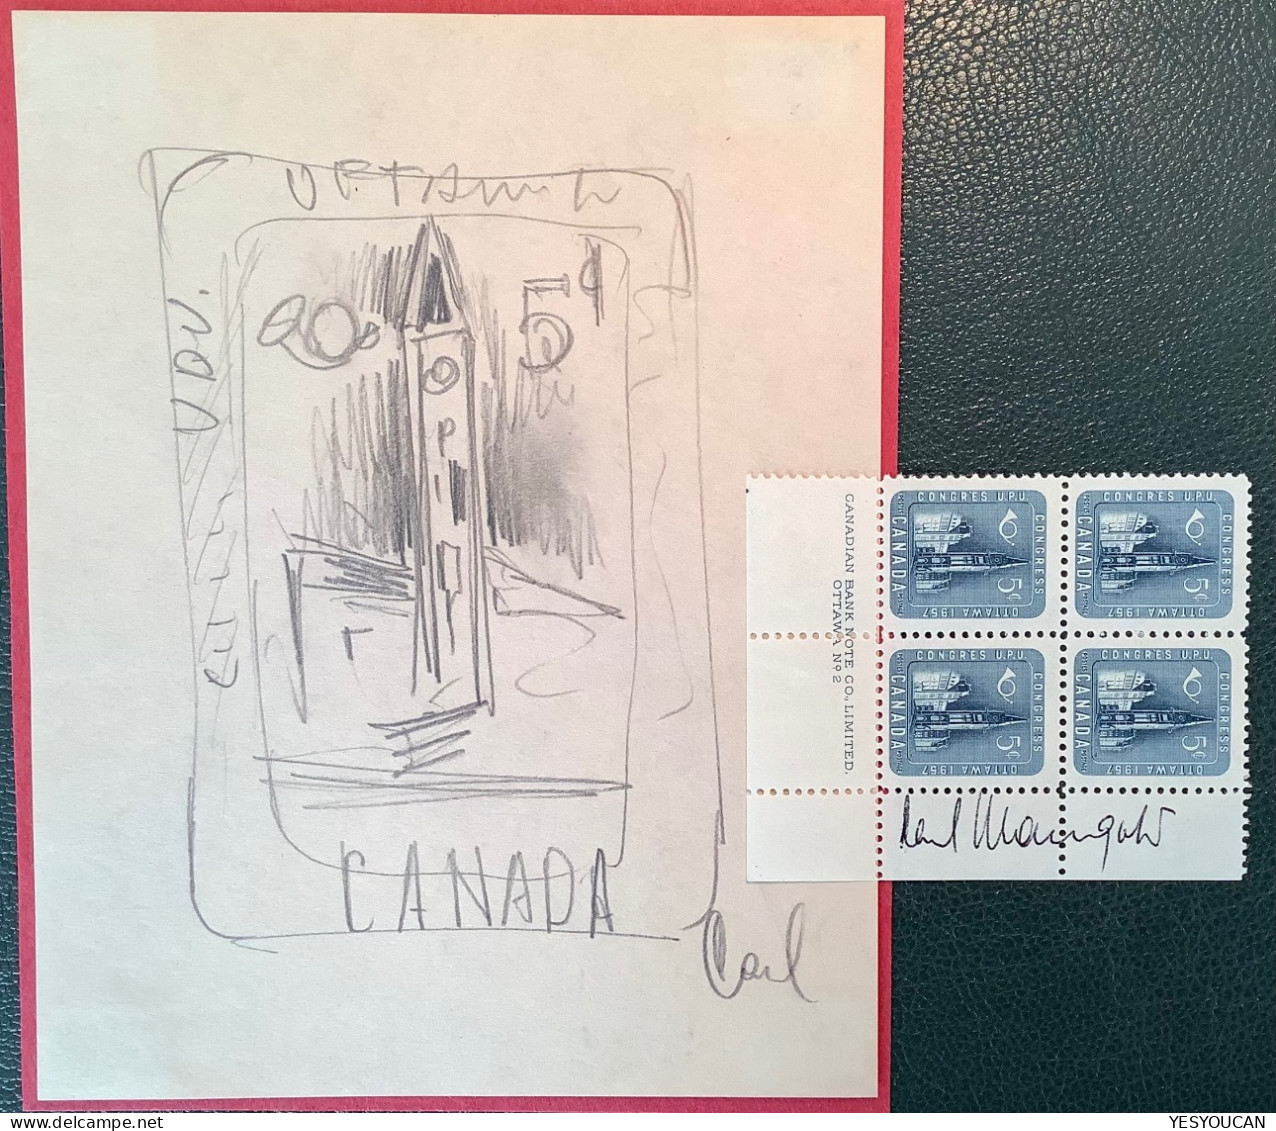 Canada Hand-drawn Essay 5c UPU CONGRESS OTTAWA 1957 Signed By Artist + Stamp, Ex Severin UPU Coll. Corinphila2012 (Proof - Nuevos